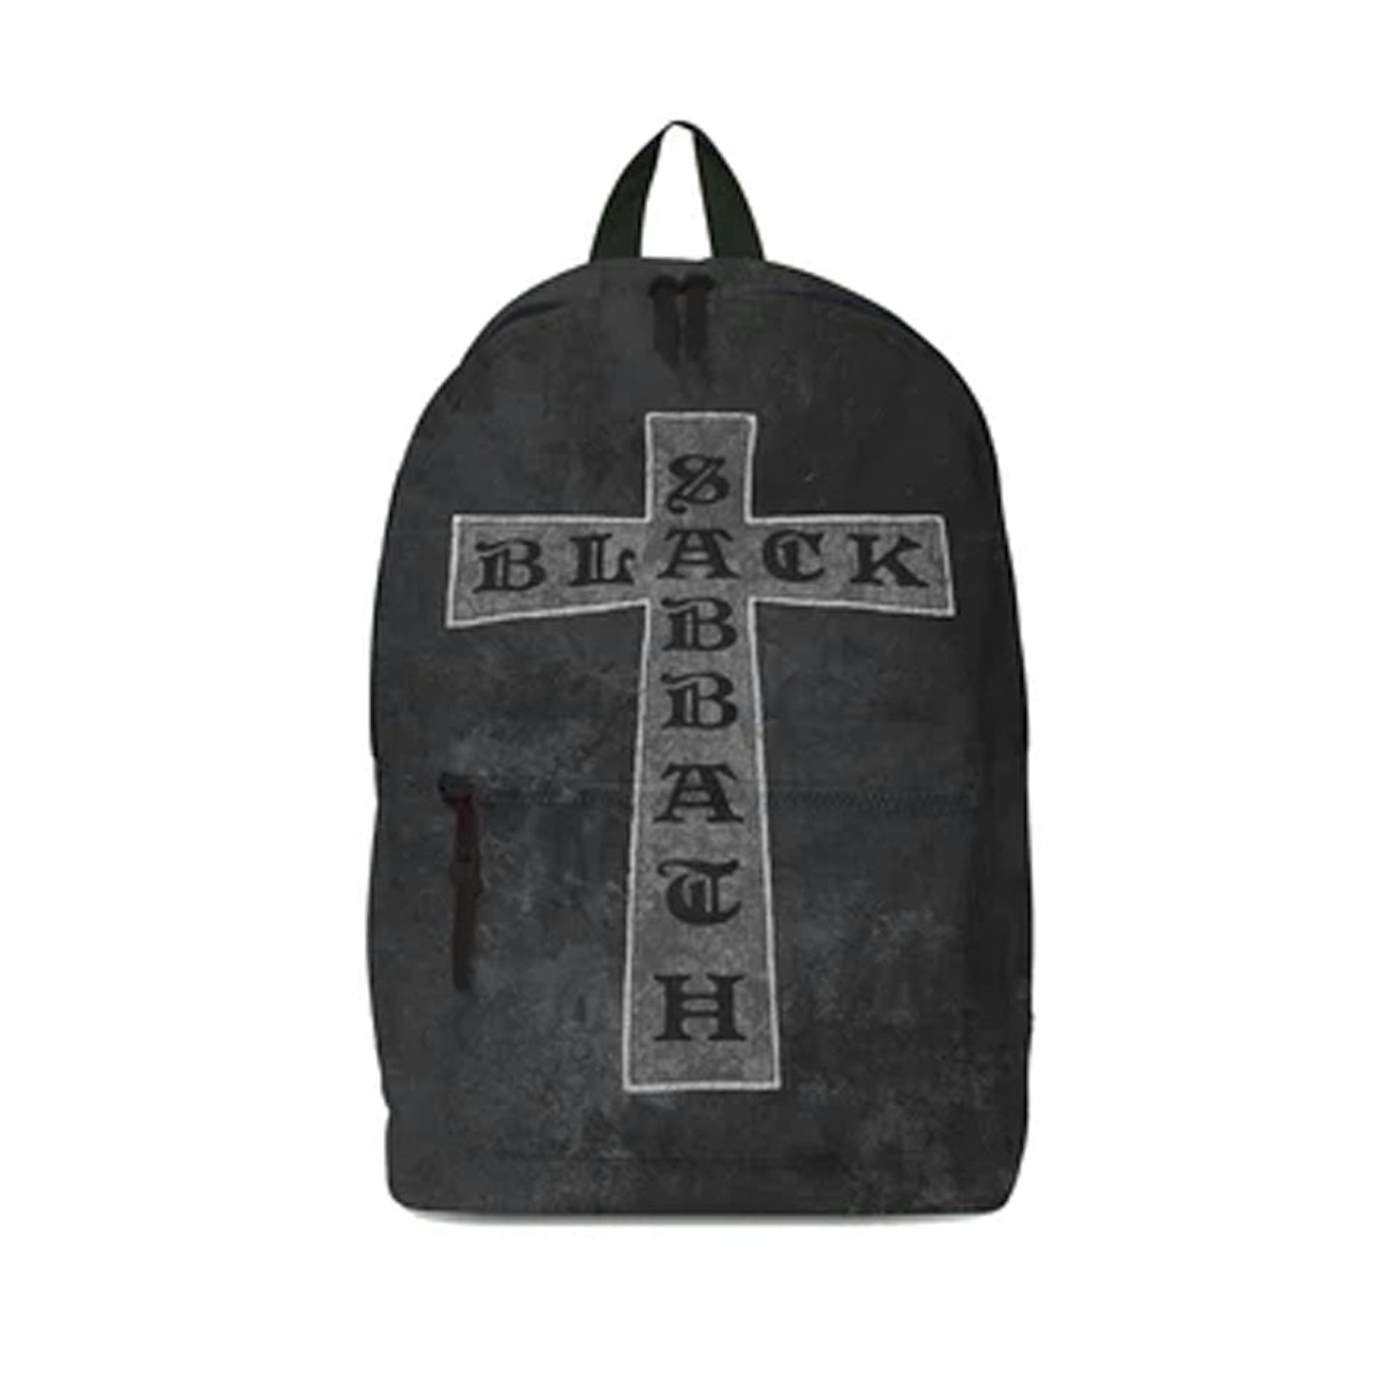 Rocksax Black Sabbath Backpack - Crosses